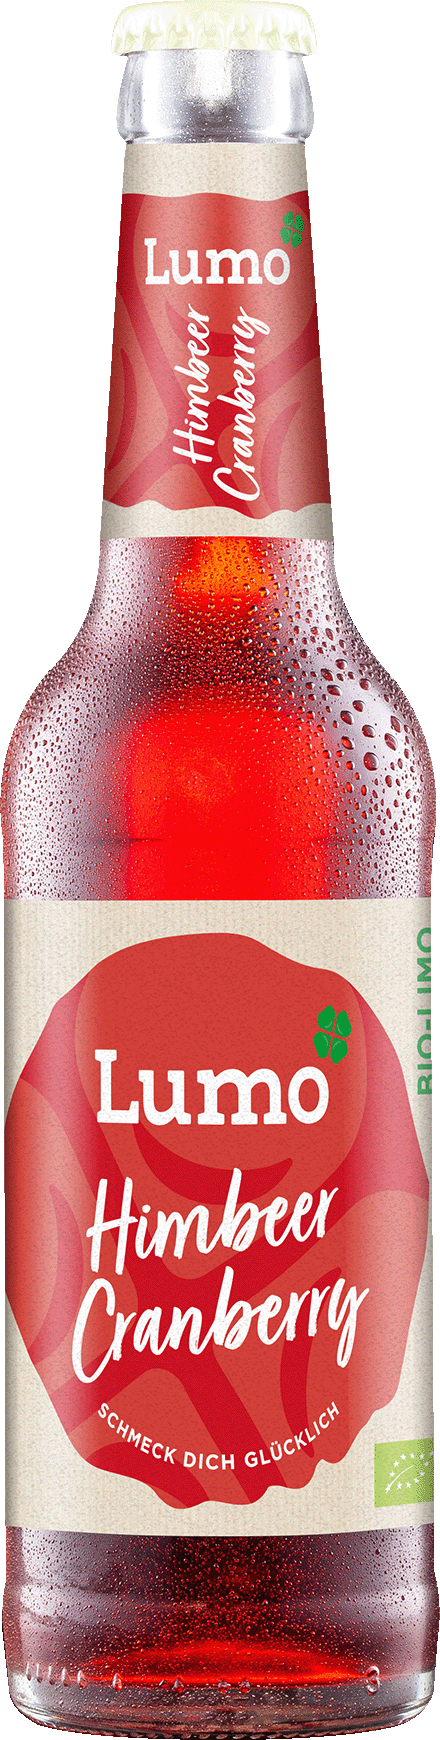 Lumo Bio Limo Flasche Himbeer Cranberry